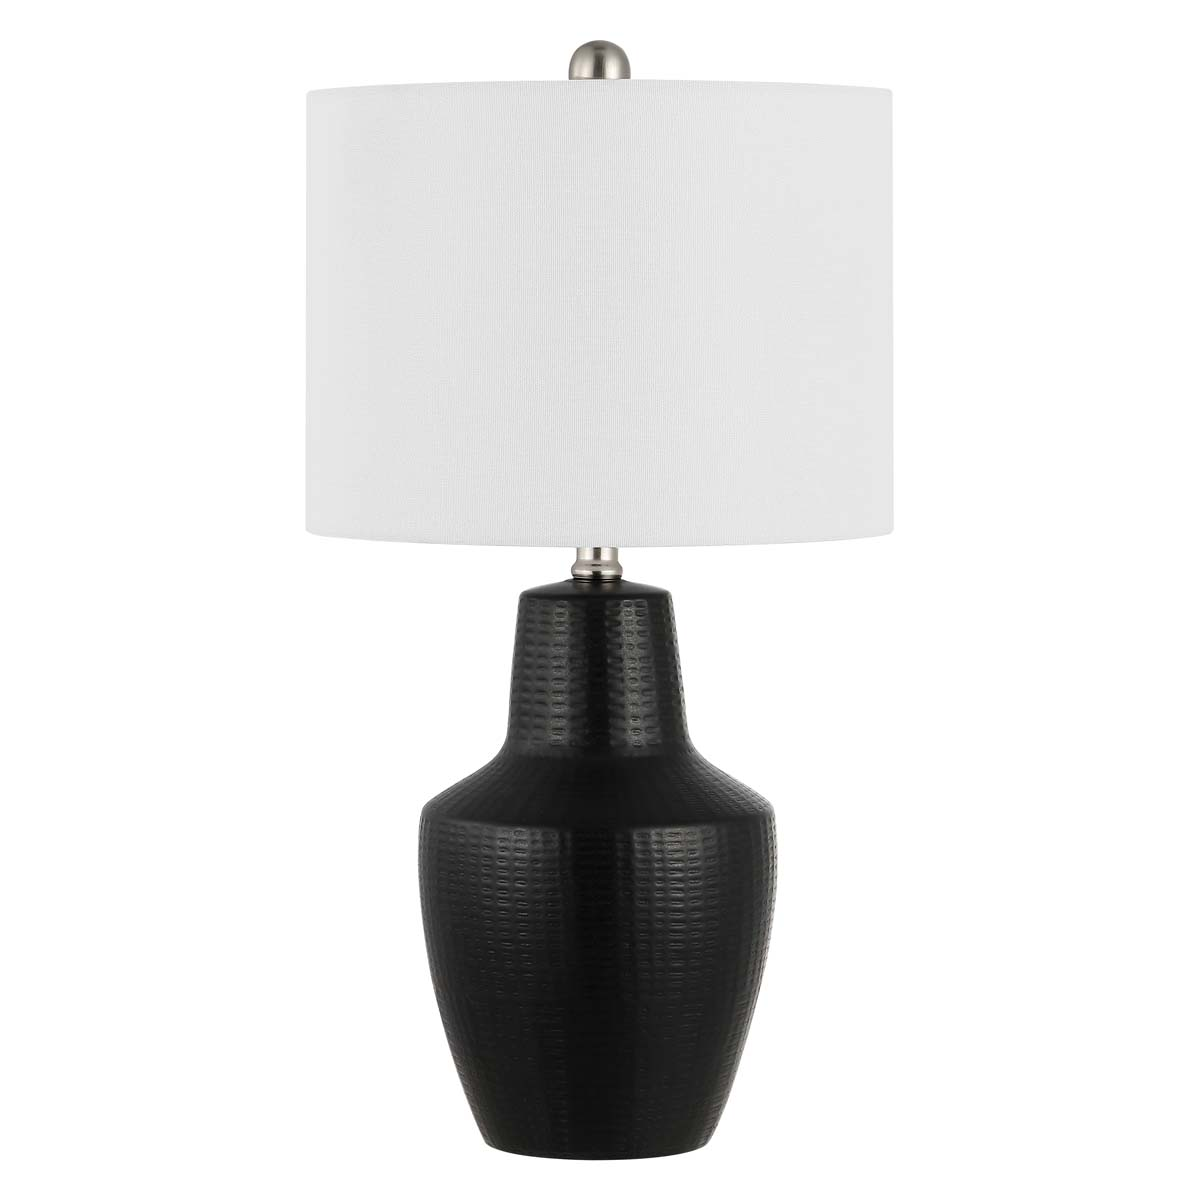 Safavieh Voetta Table Lamp , TBL4477